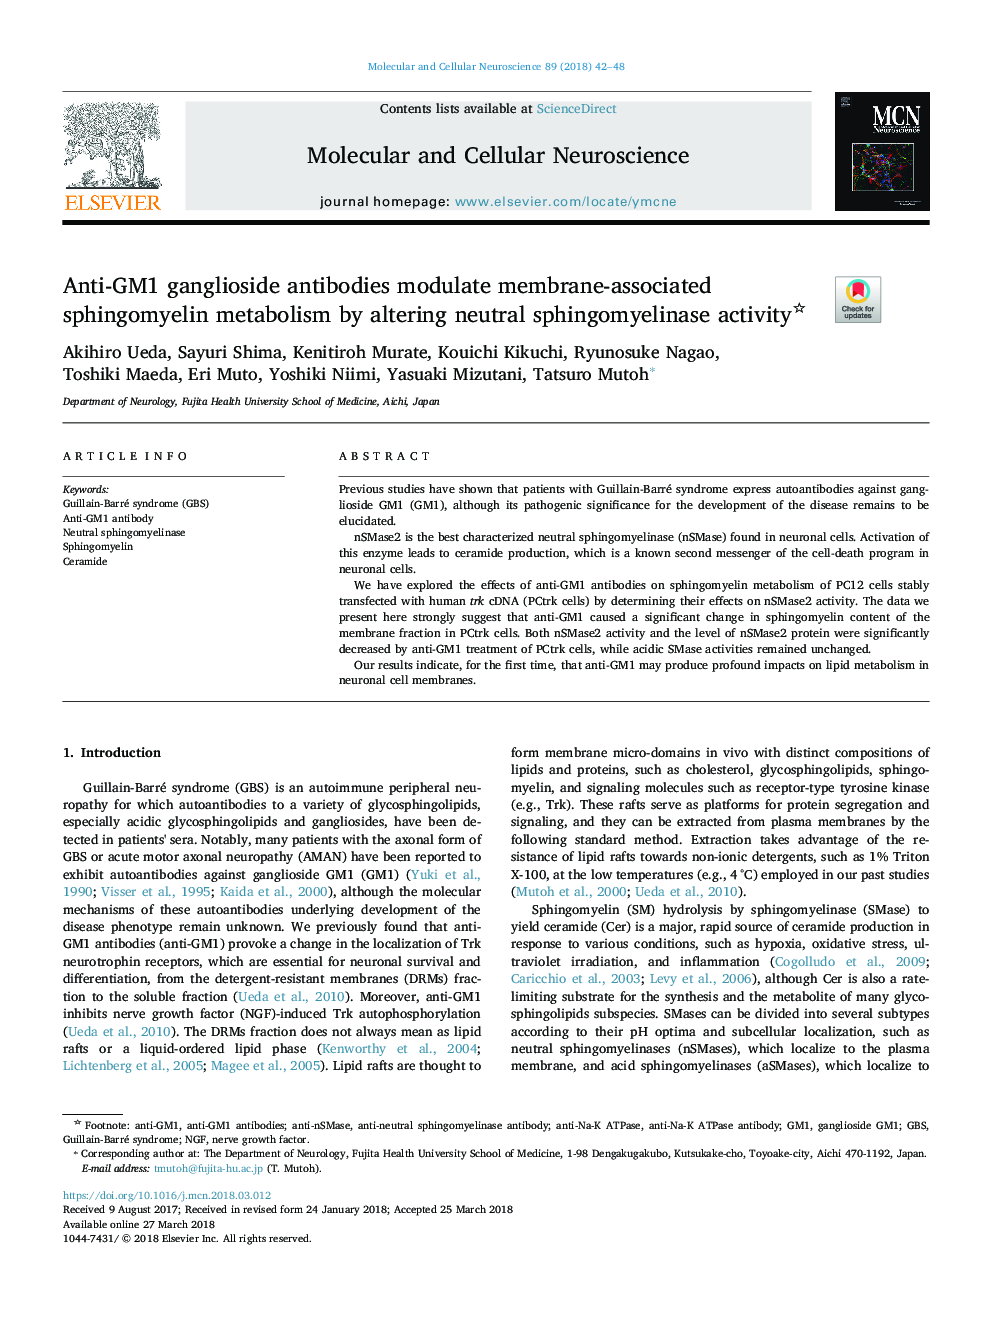 Anti-GM1 ganglioside antibodies modulate membrane-associated sphingomyelin metabolism by altering neutral sphingomyelinase activity